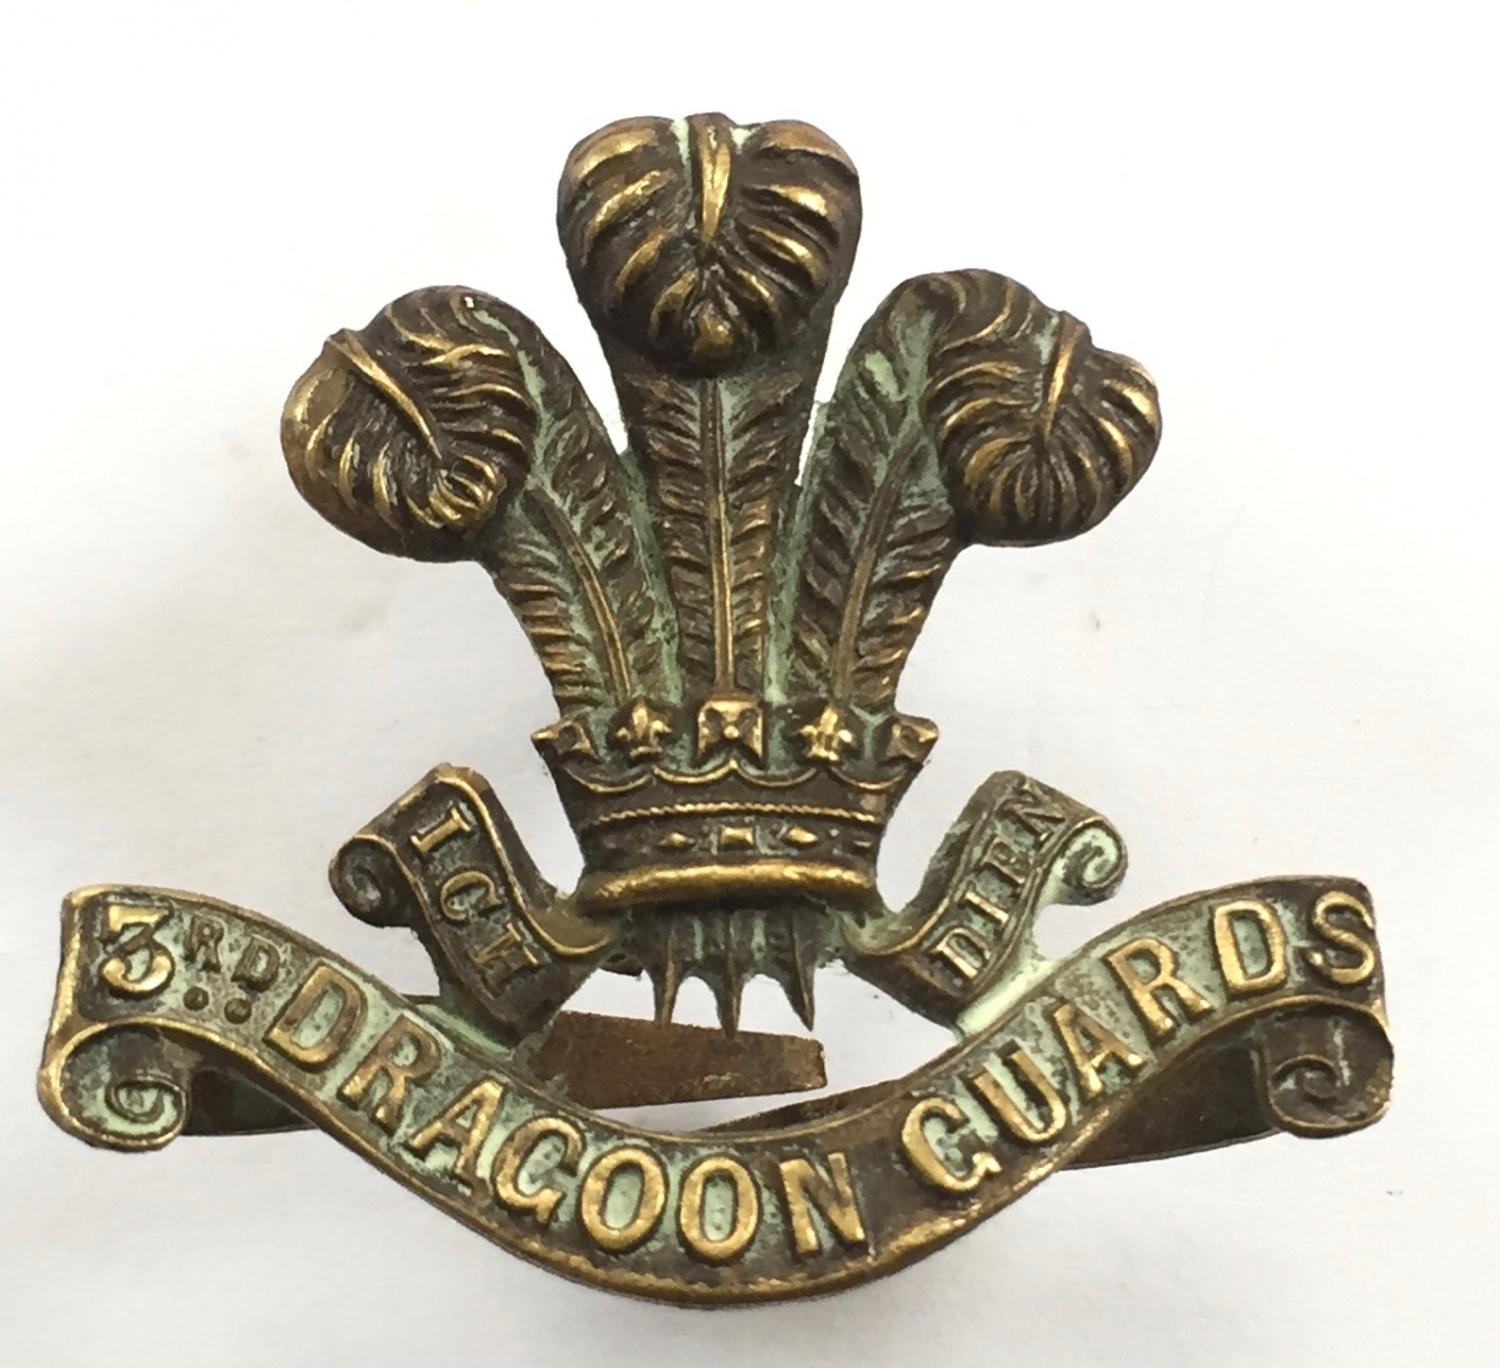 3rd Dragoon Guards OSD FS cap badge